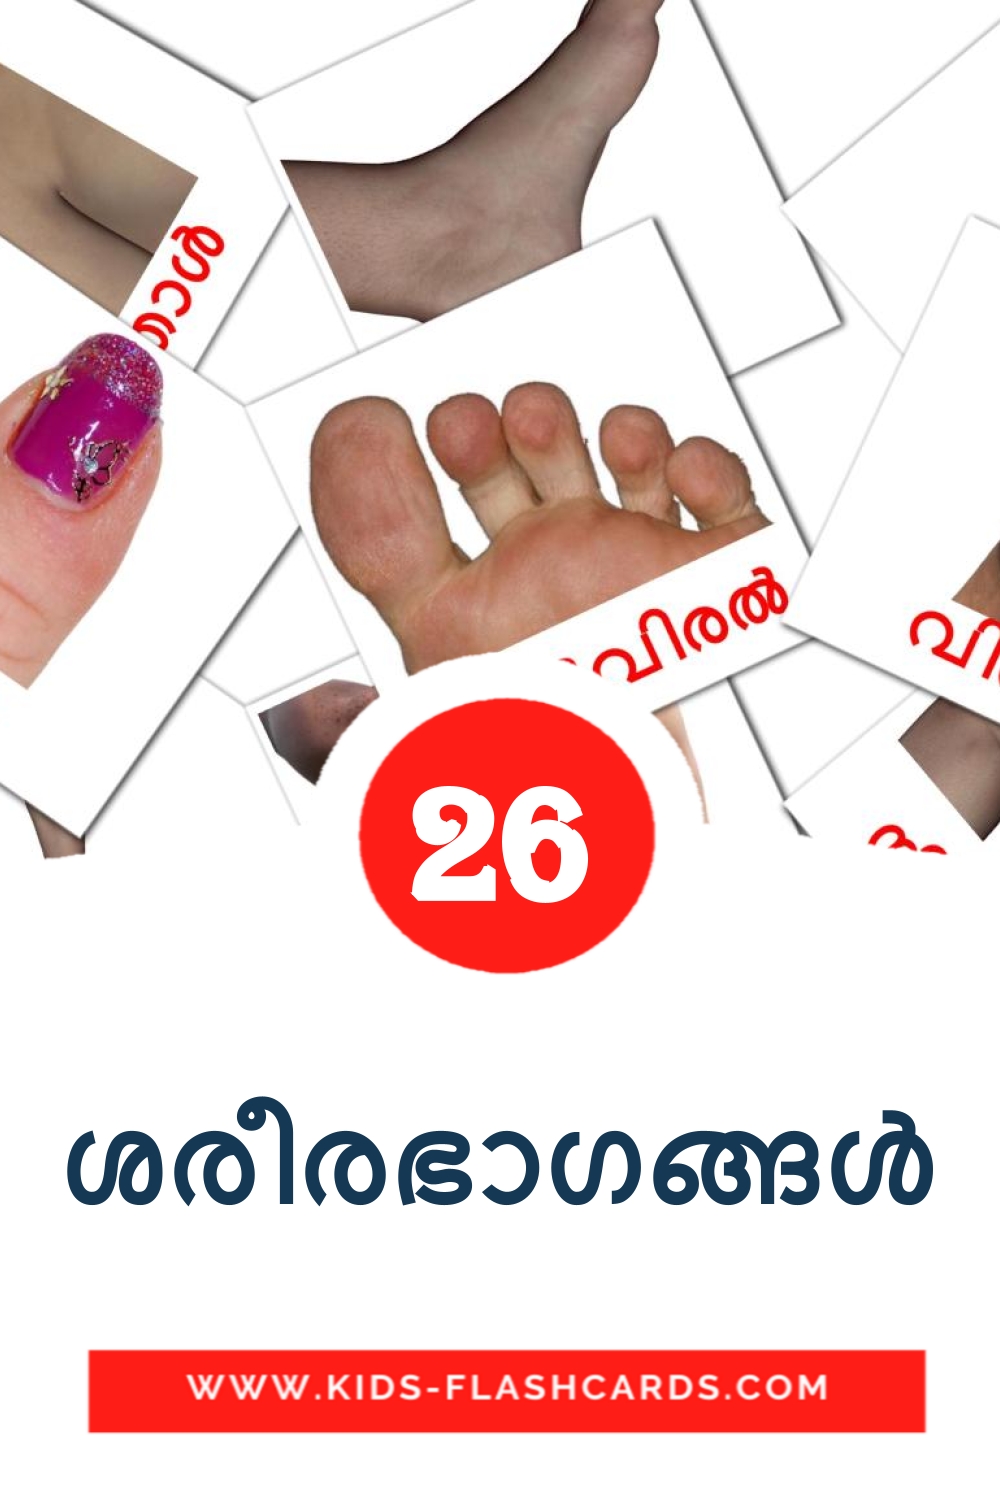 26 ശരീരഭാഗങ്ങൾ fotokaarten voor kleuters in het malayalam